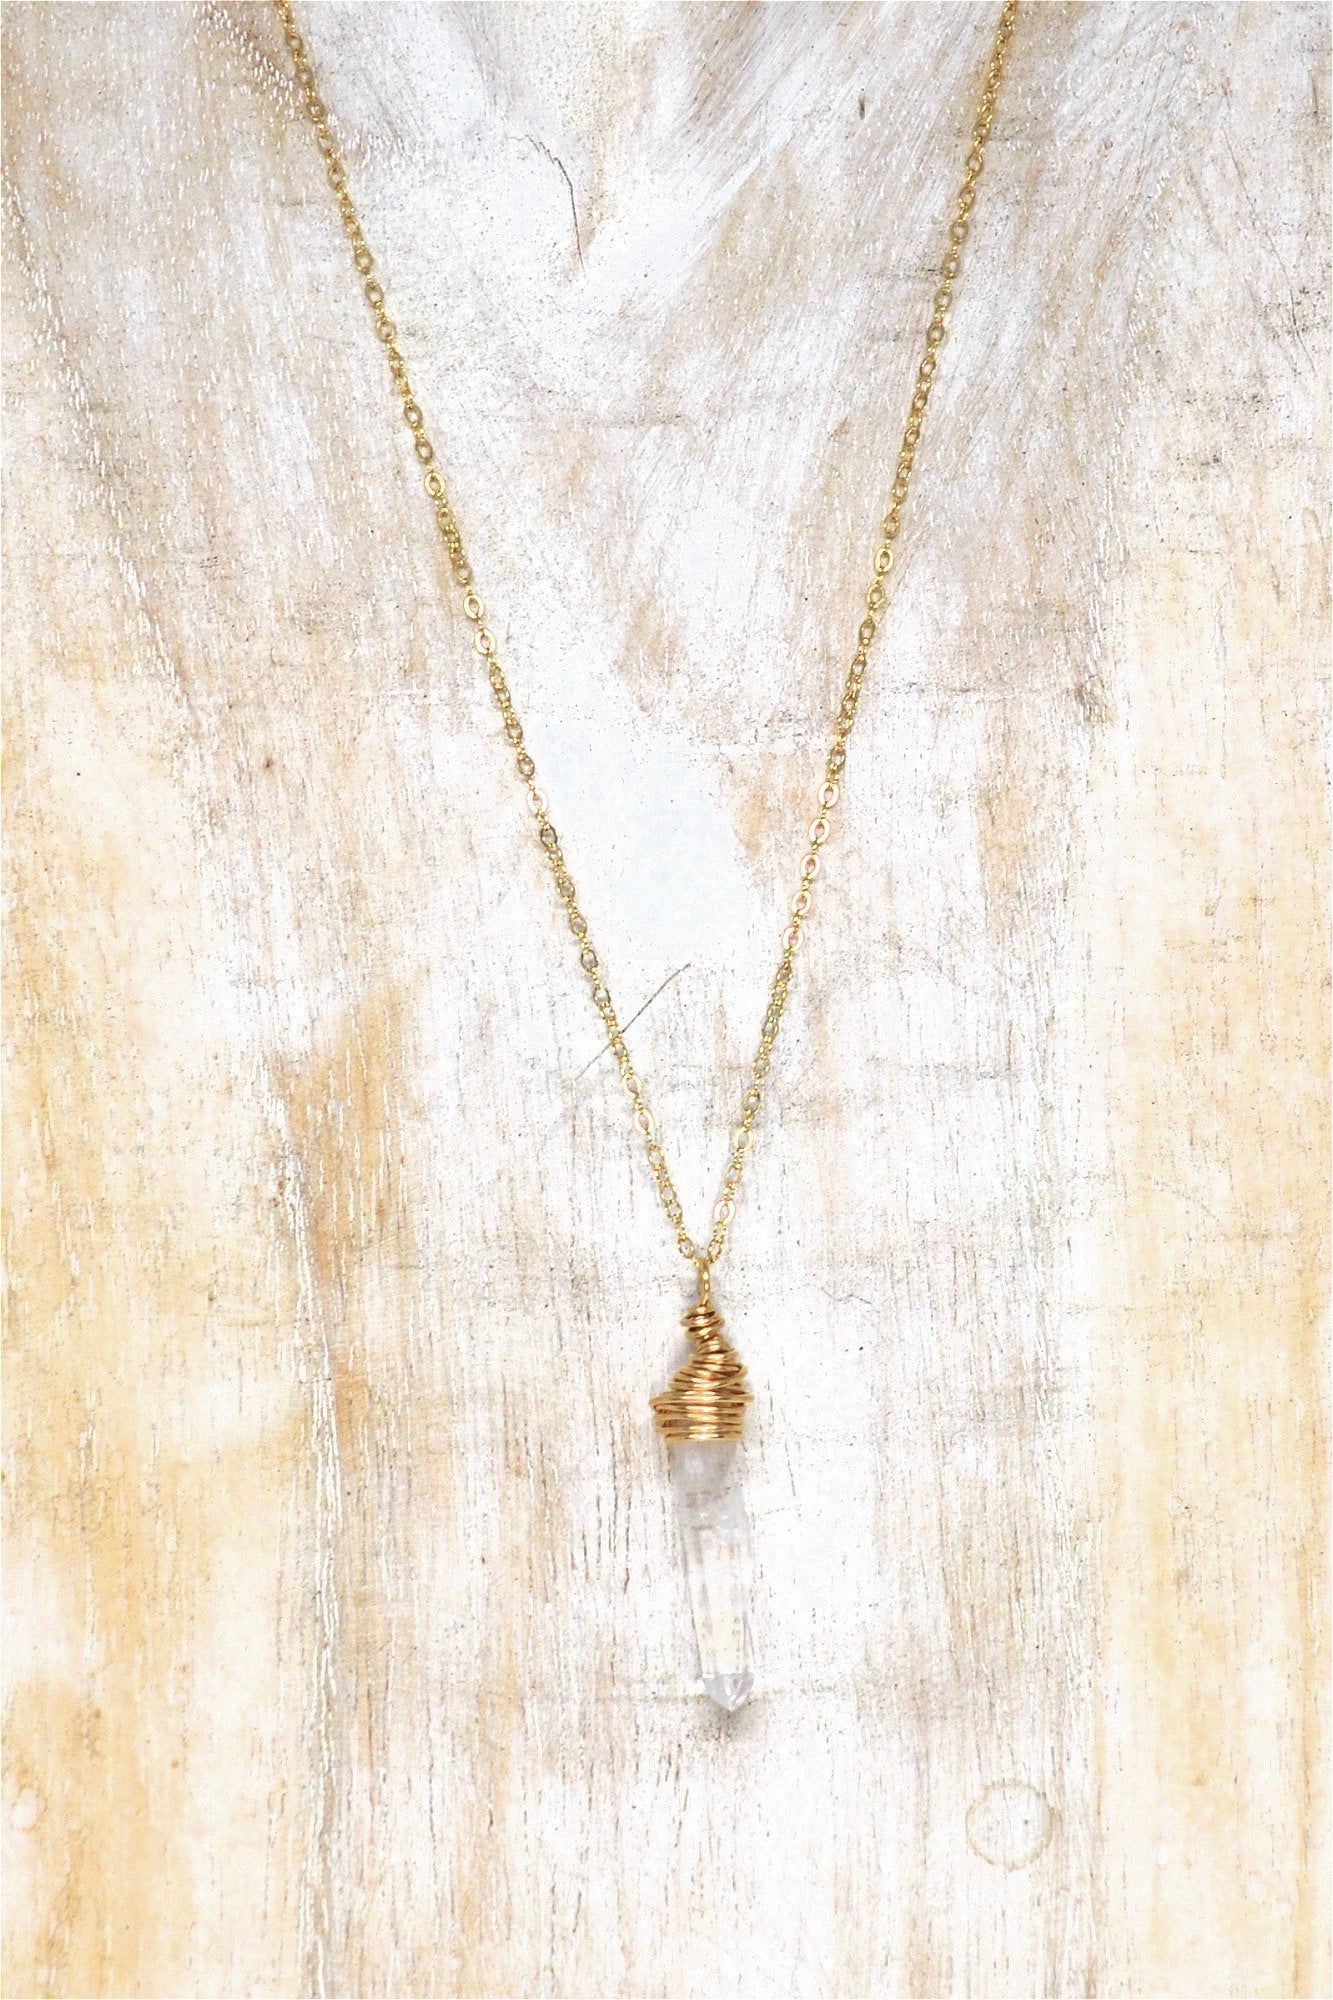 Raw Quartz Point 14K Gold Filled Necklace || April Birthstone